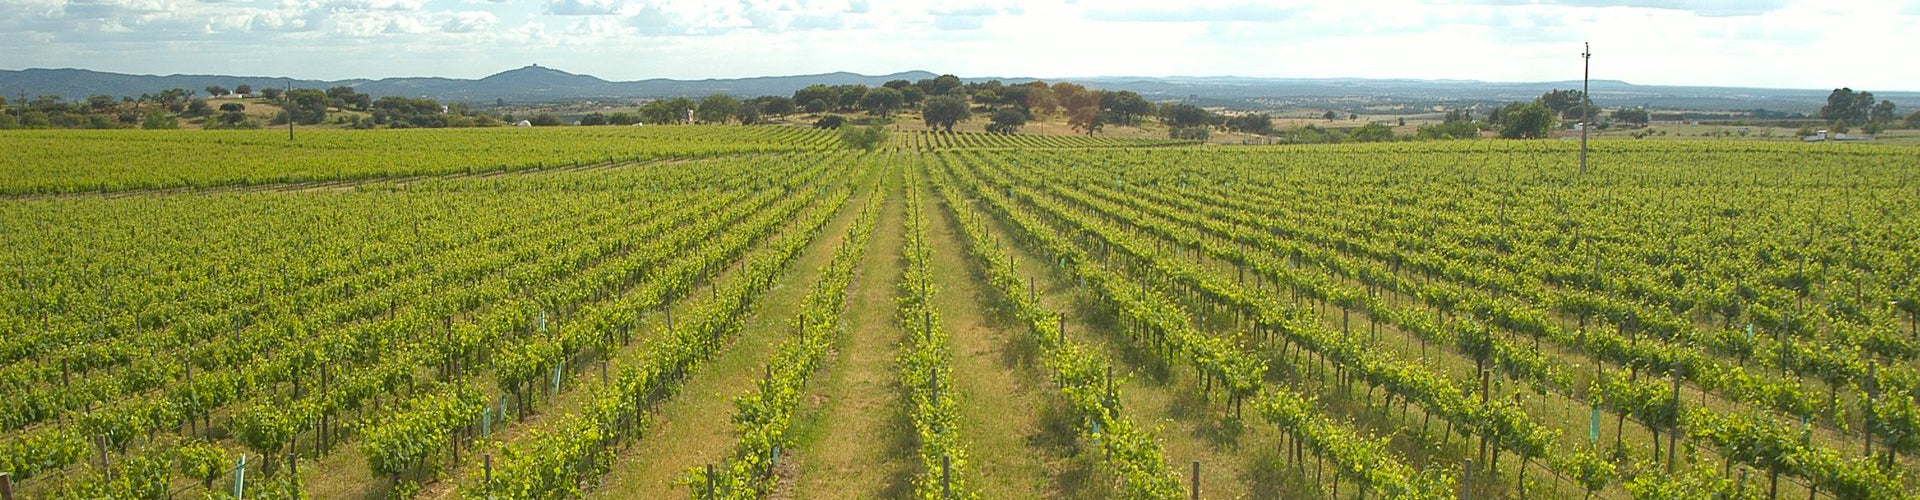 Vineyards in the Alentejo wine region of Portugal